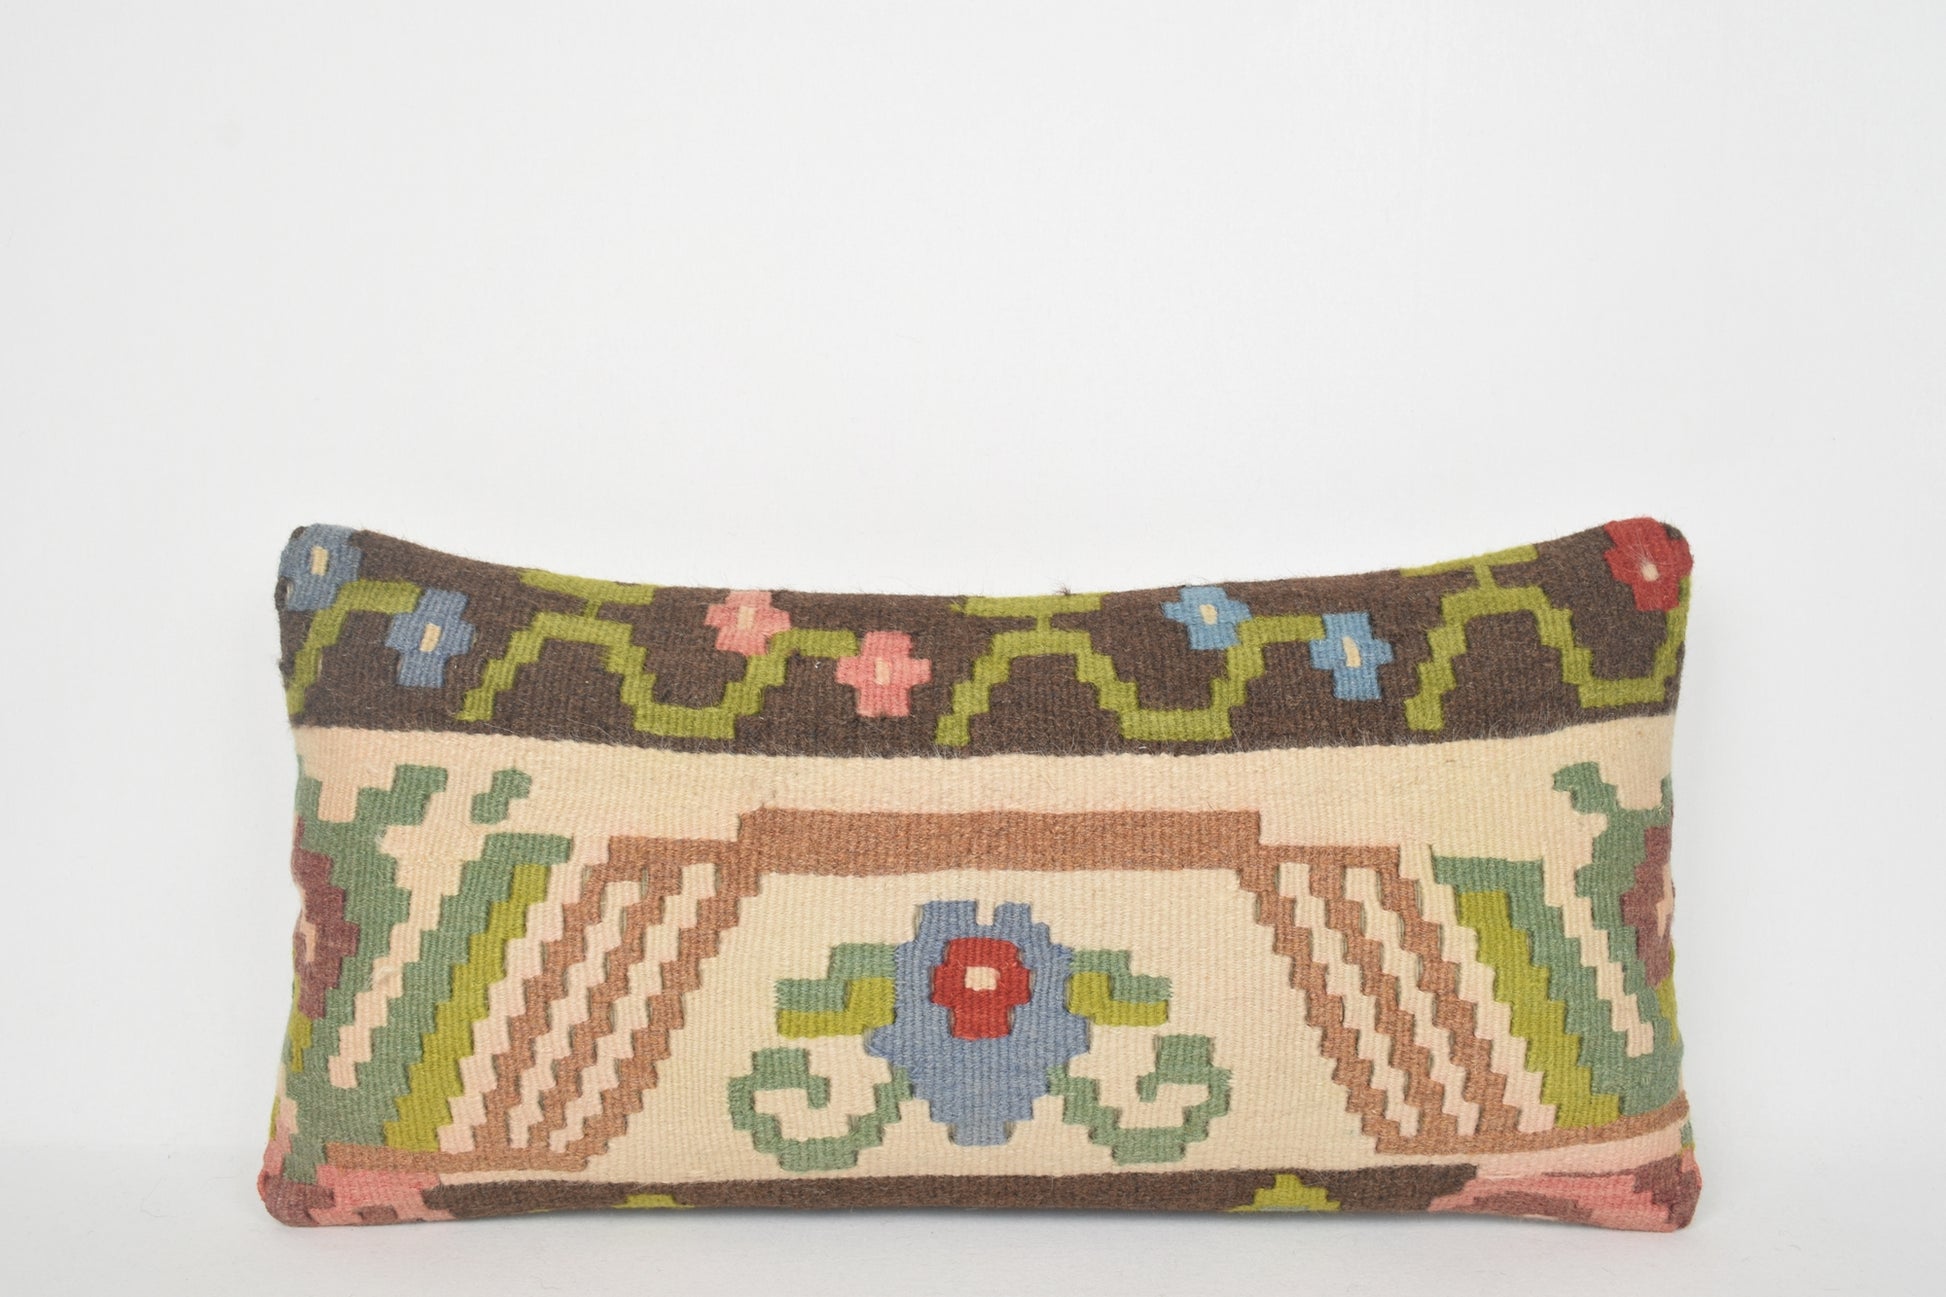 Southwest Pillow Covers Lumbar, Kilim Rug Jakarta Pillow F00172 12x24 " - 30x60 cm.